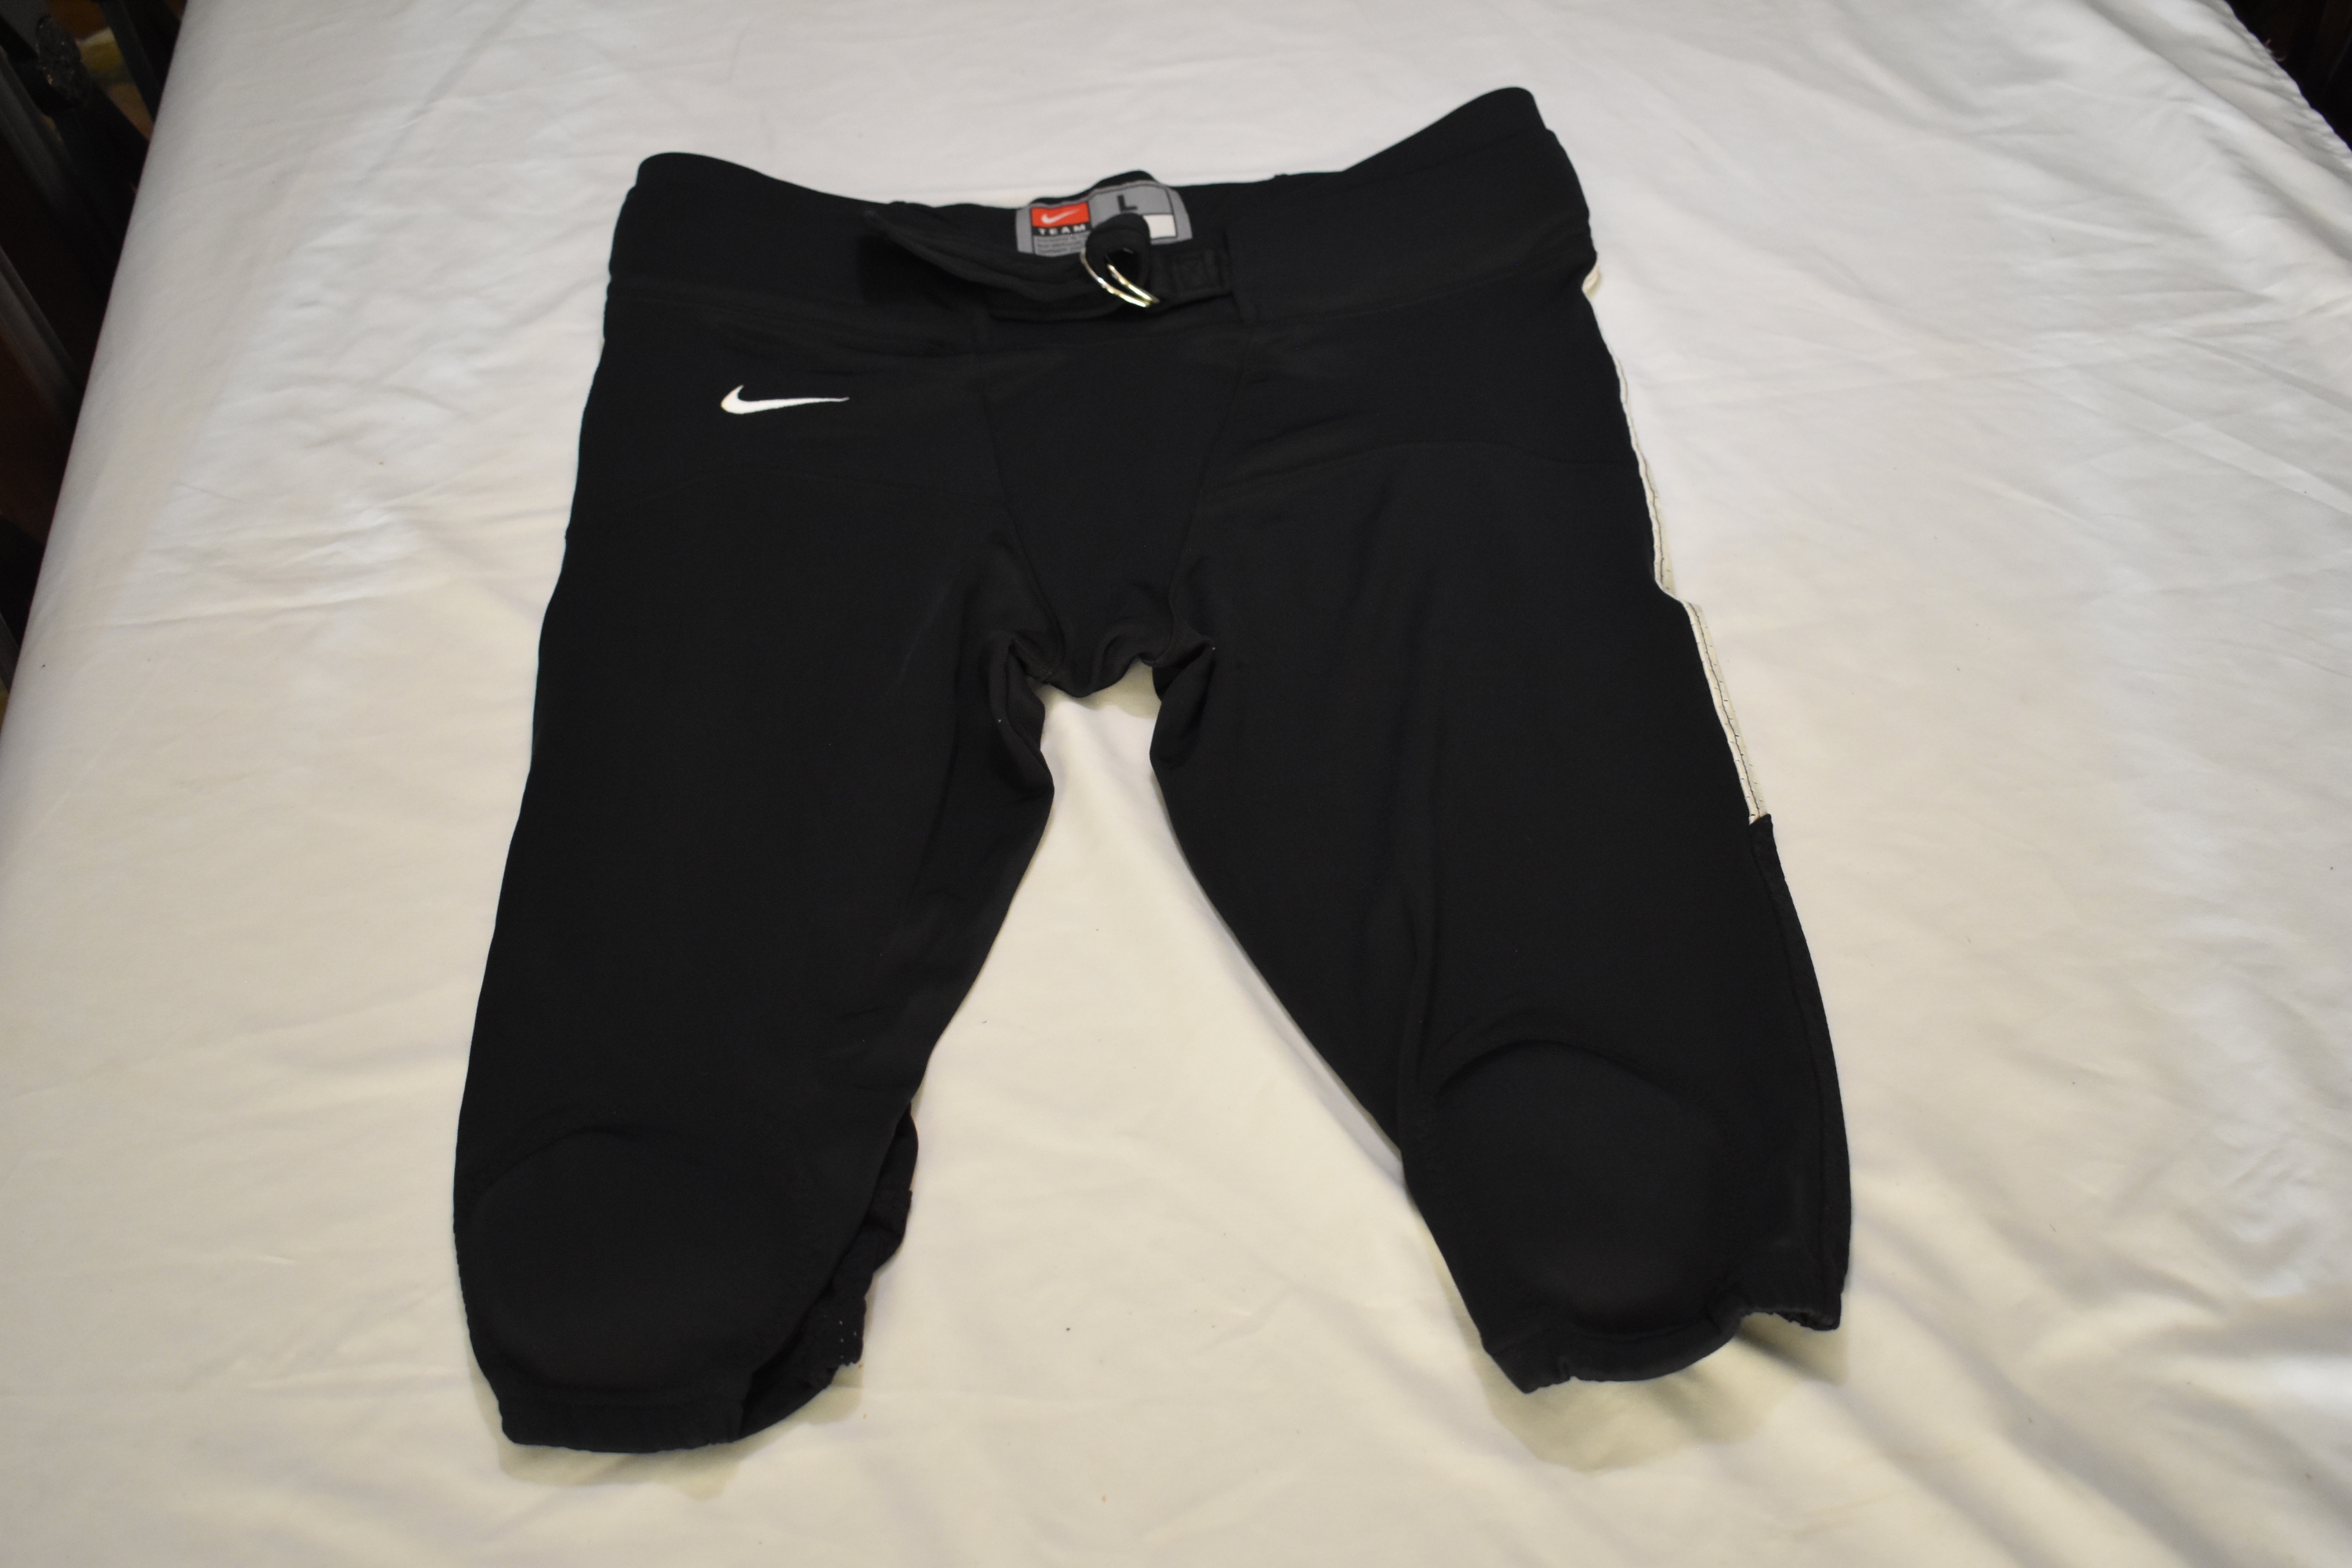 NEW - Nike Beavers Team Football Game Pants, Black/Orange/White, Large